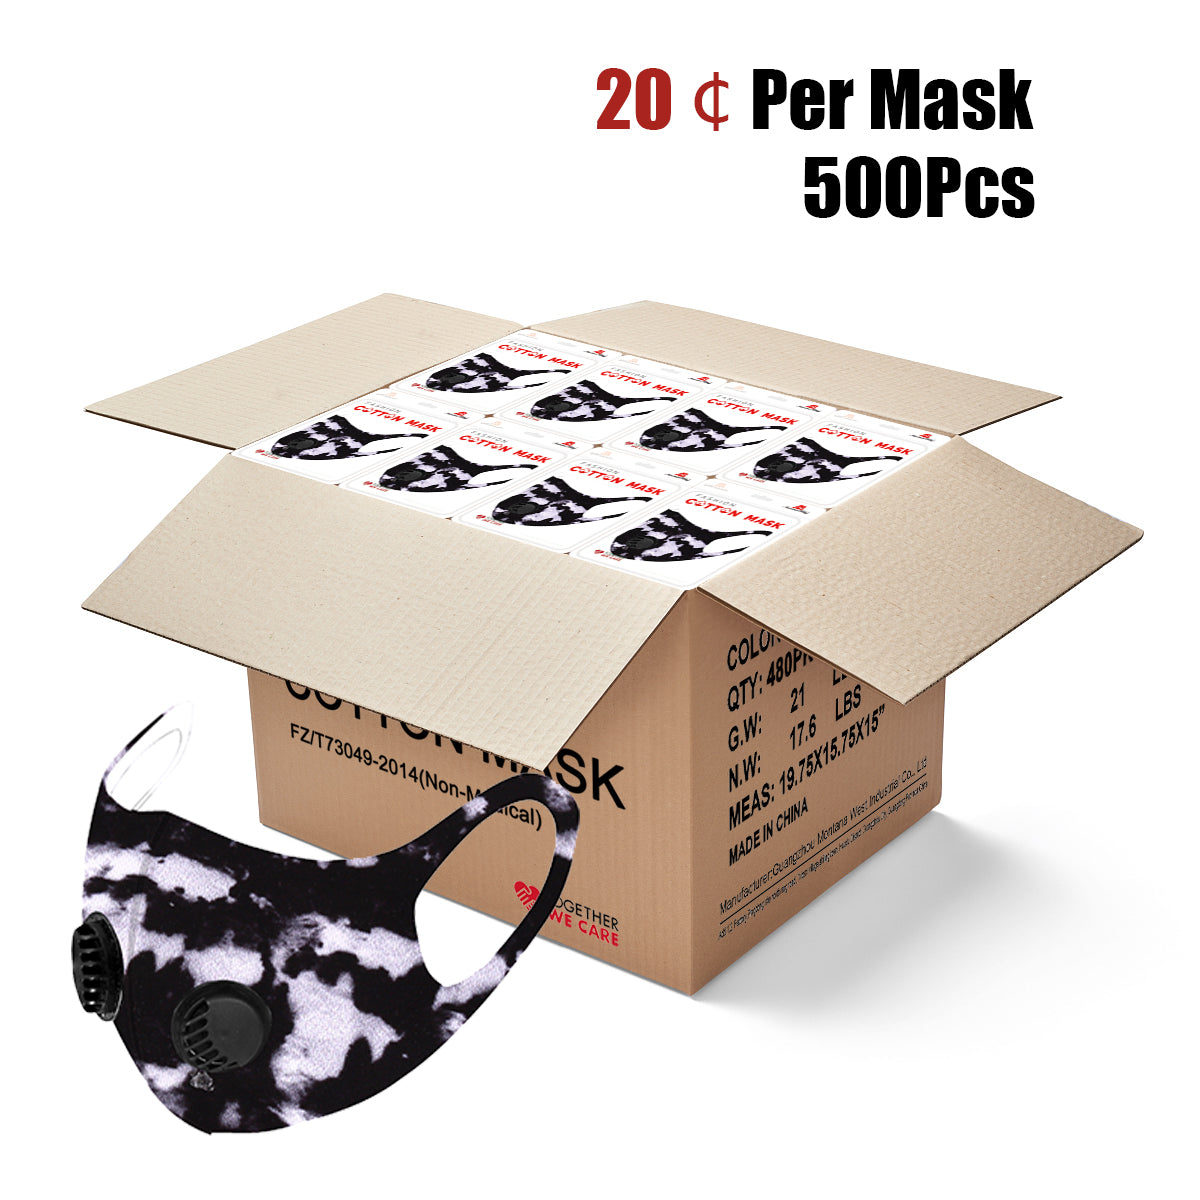 500Pcs Black Camo Print Double Breathing Valve Single Ply Face Mask